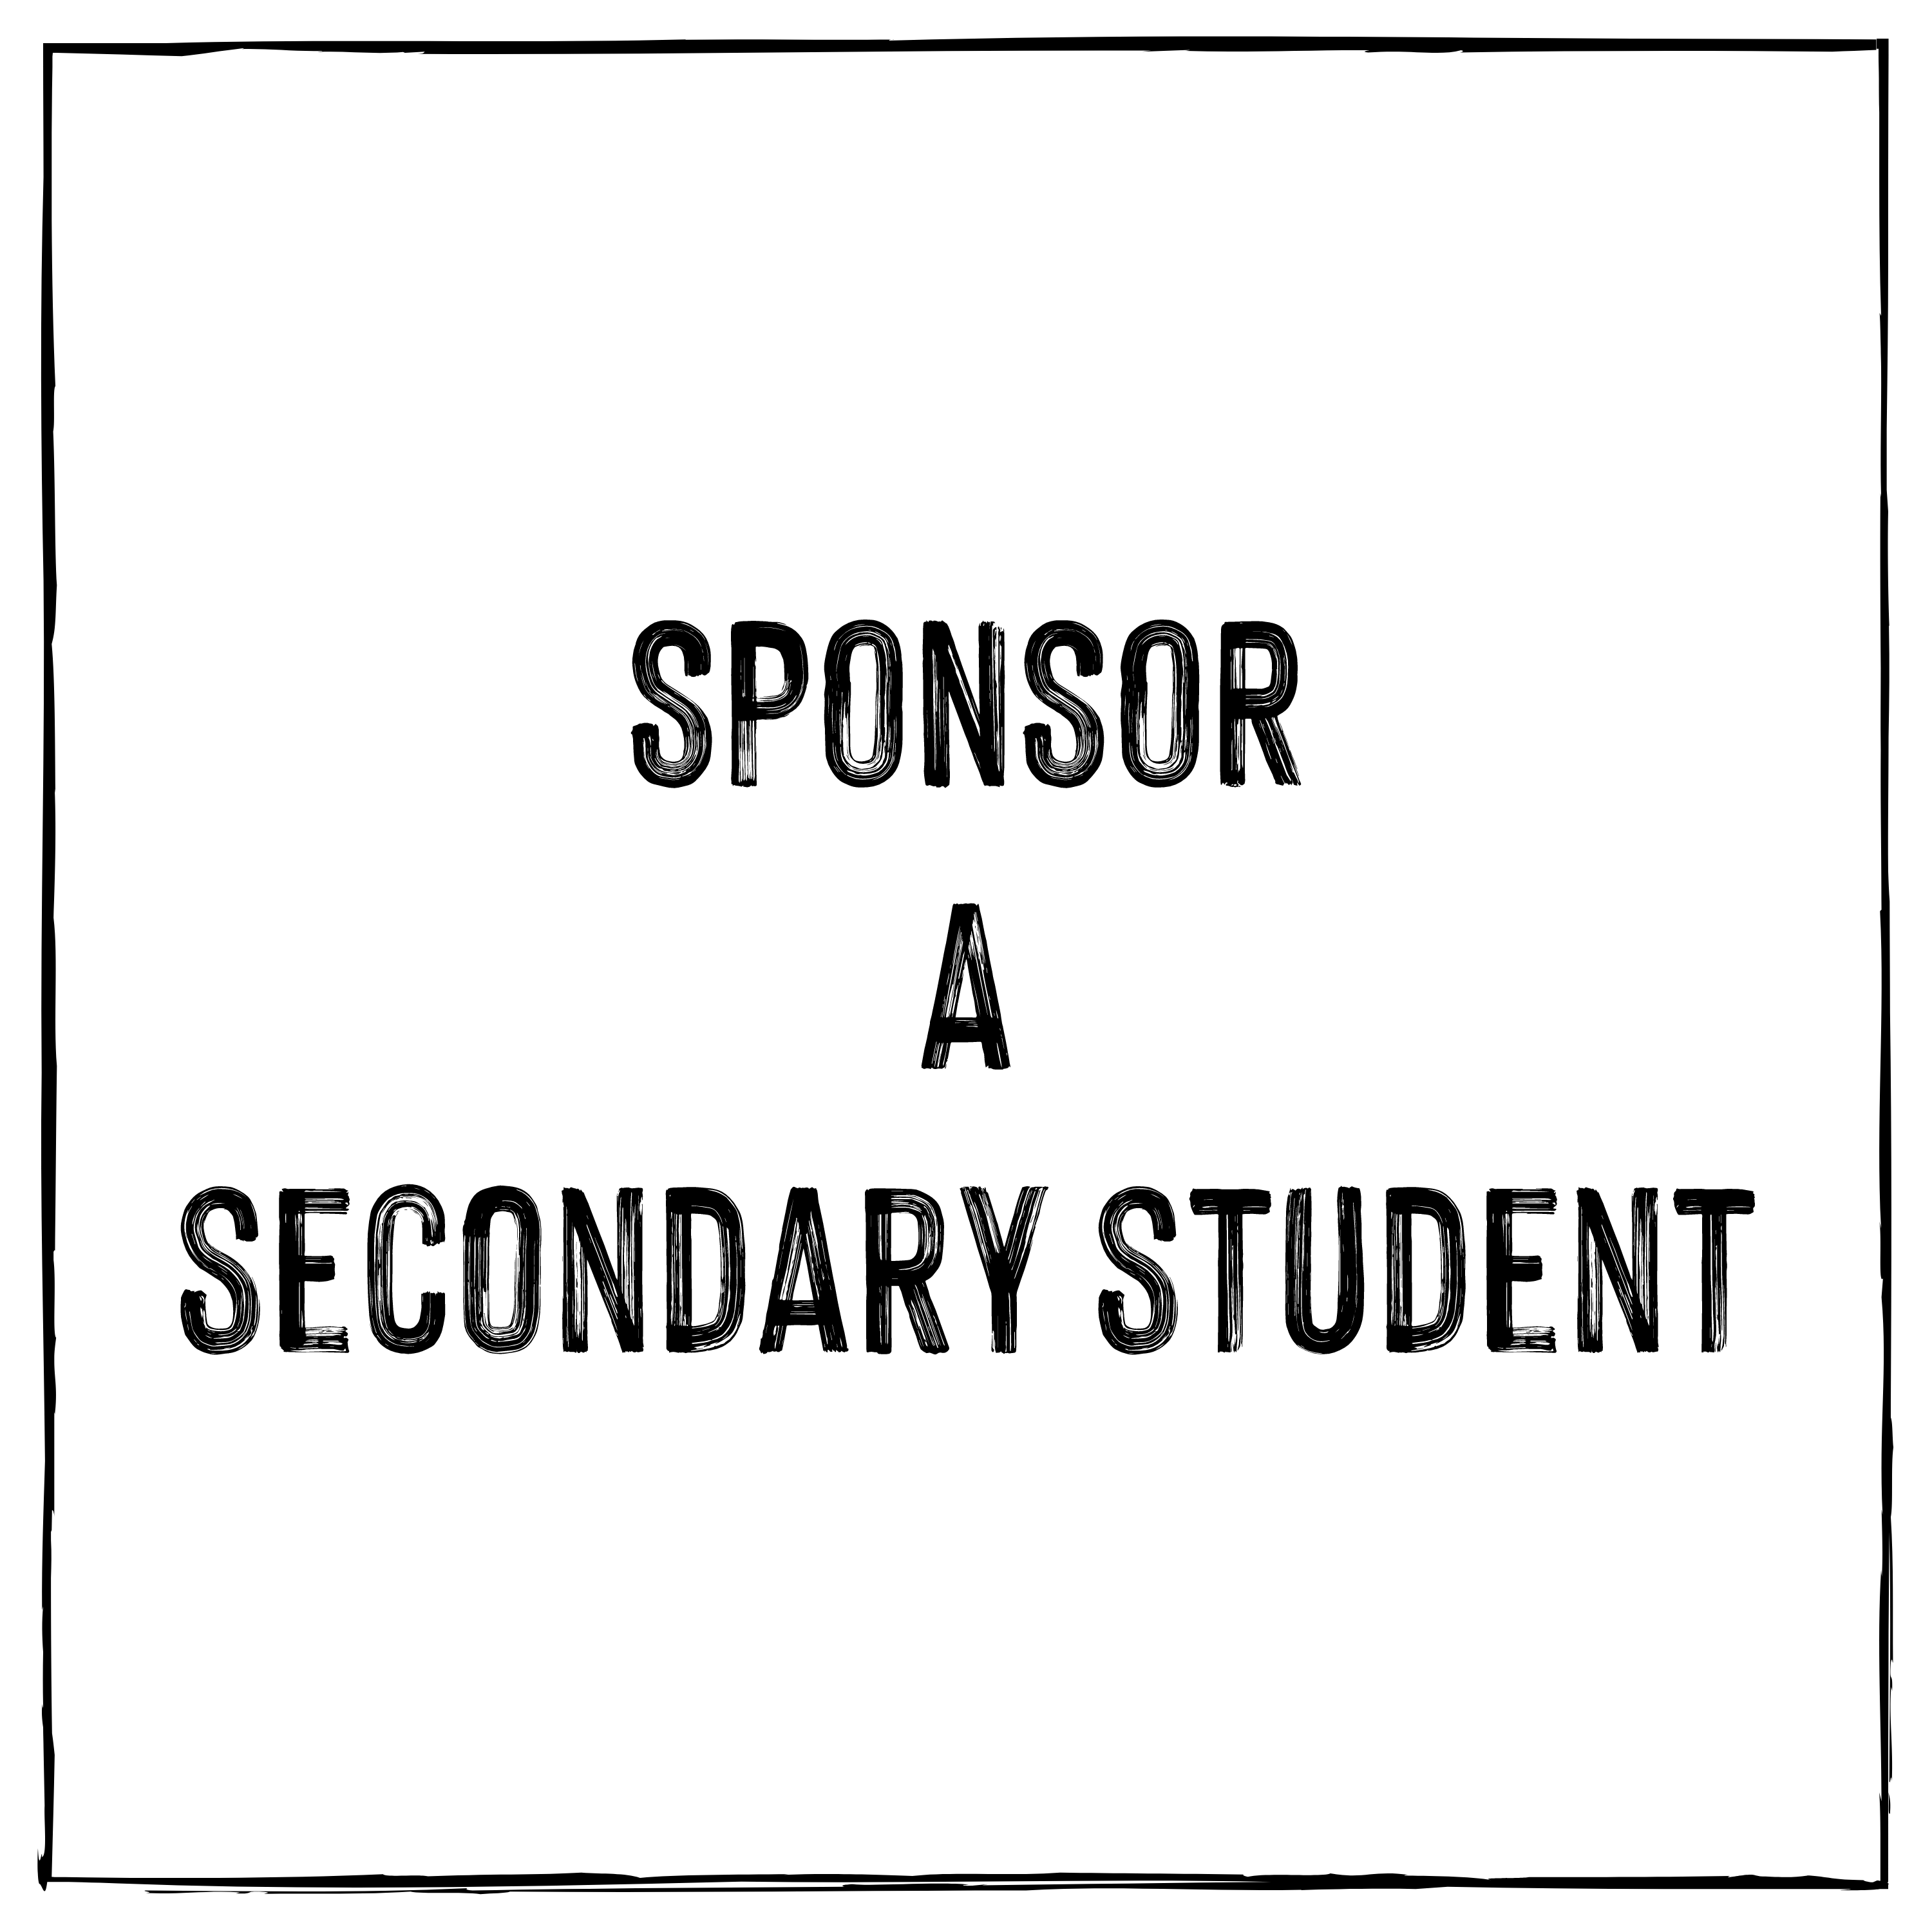 Sponsor a Secondary Student